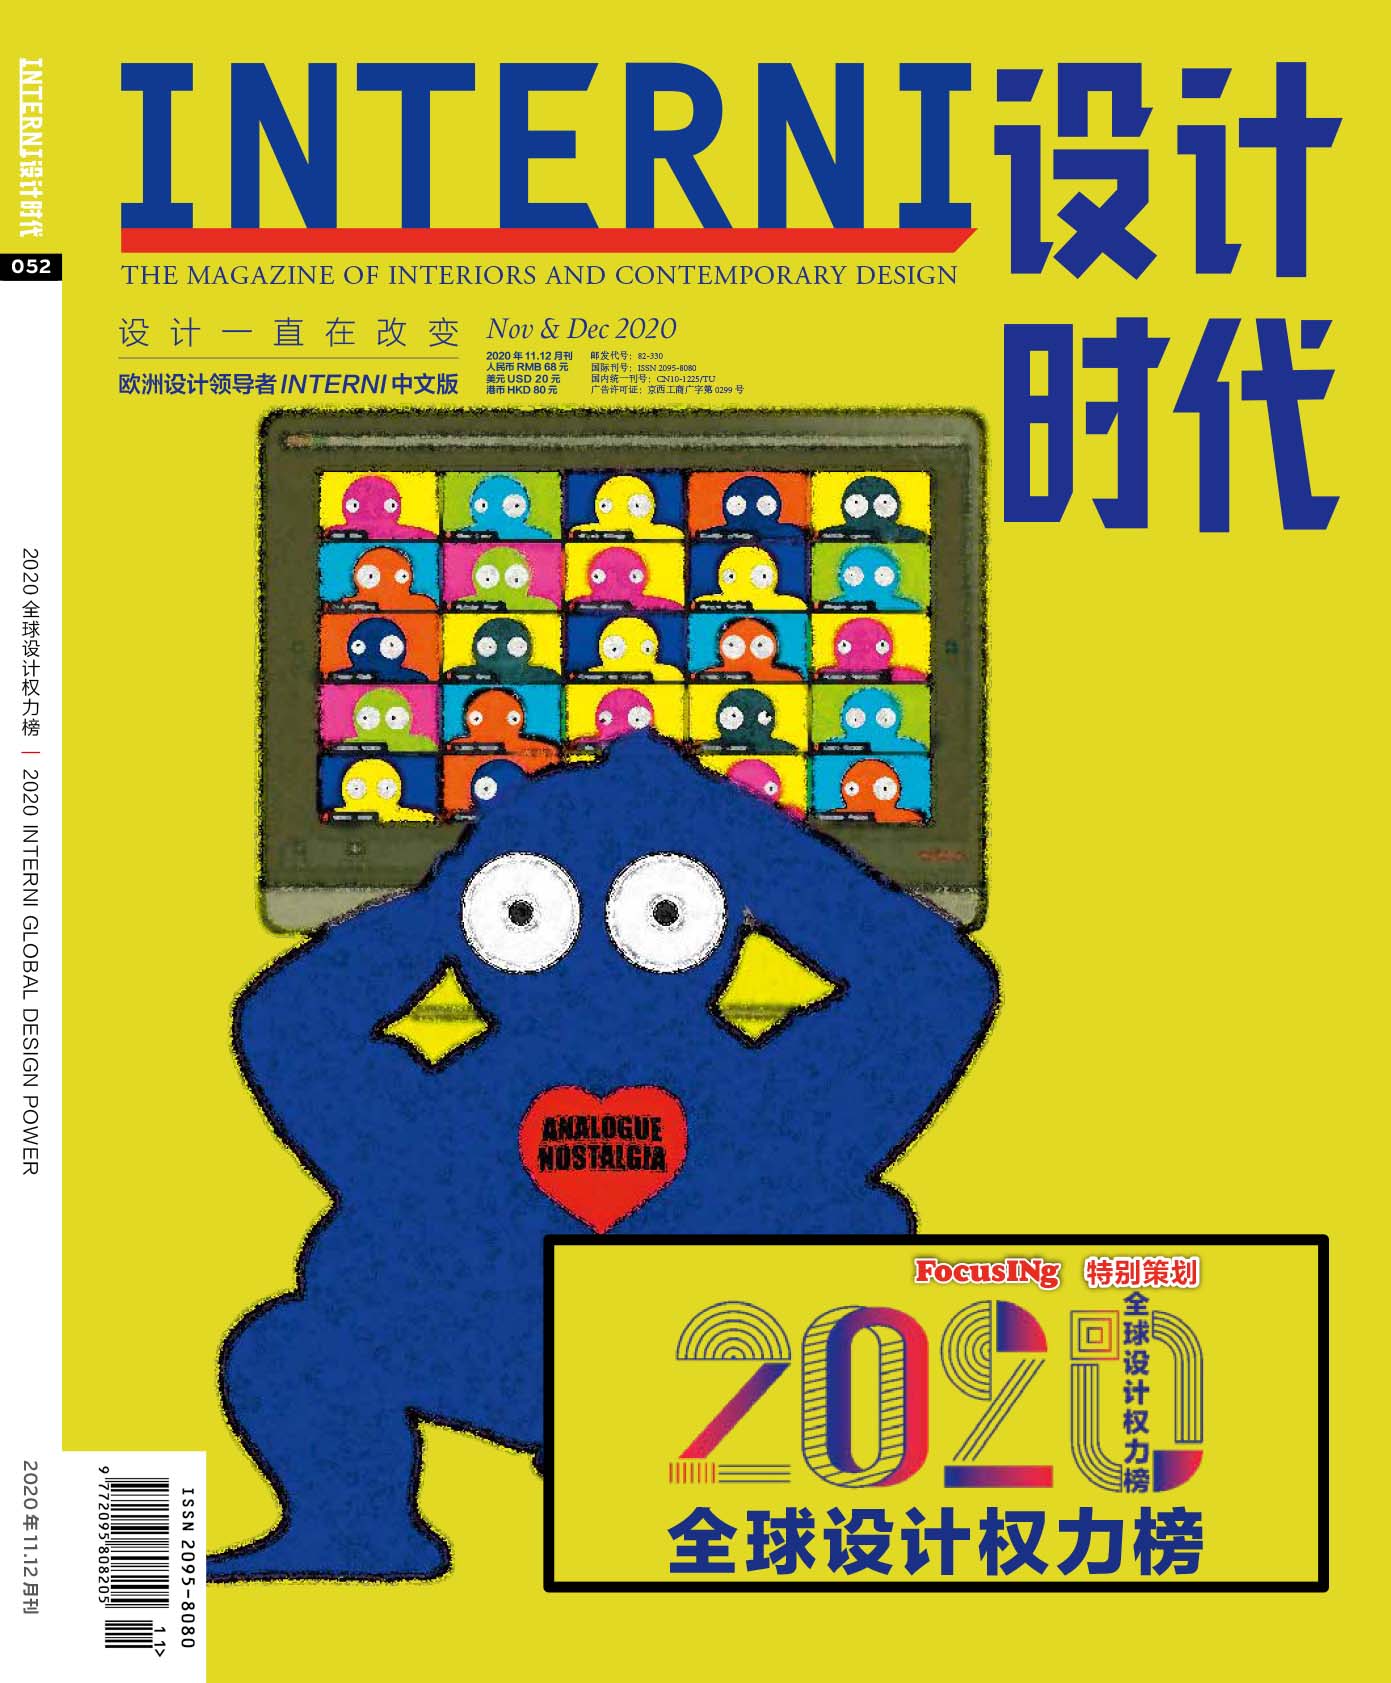 INTERNI magazine